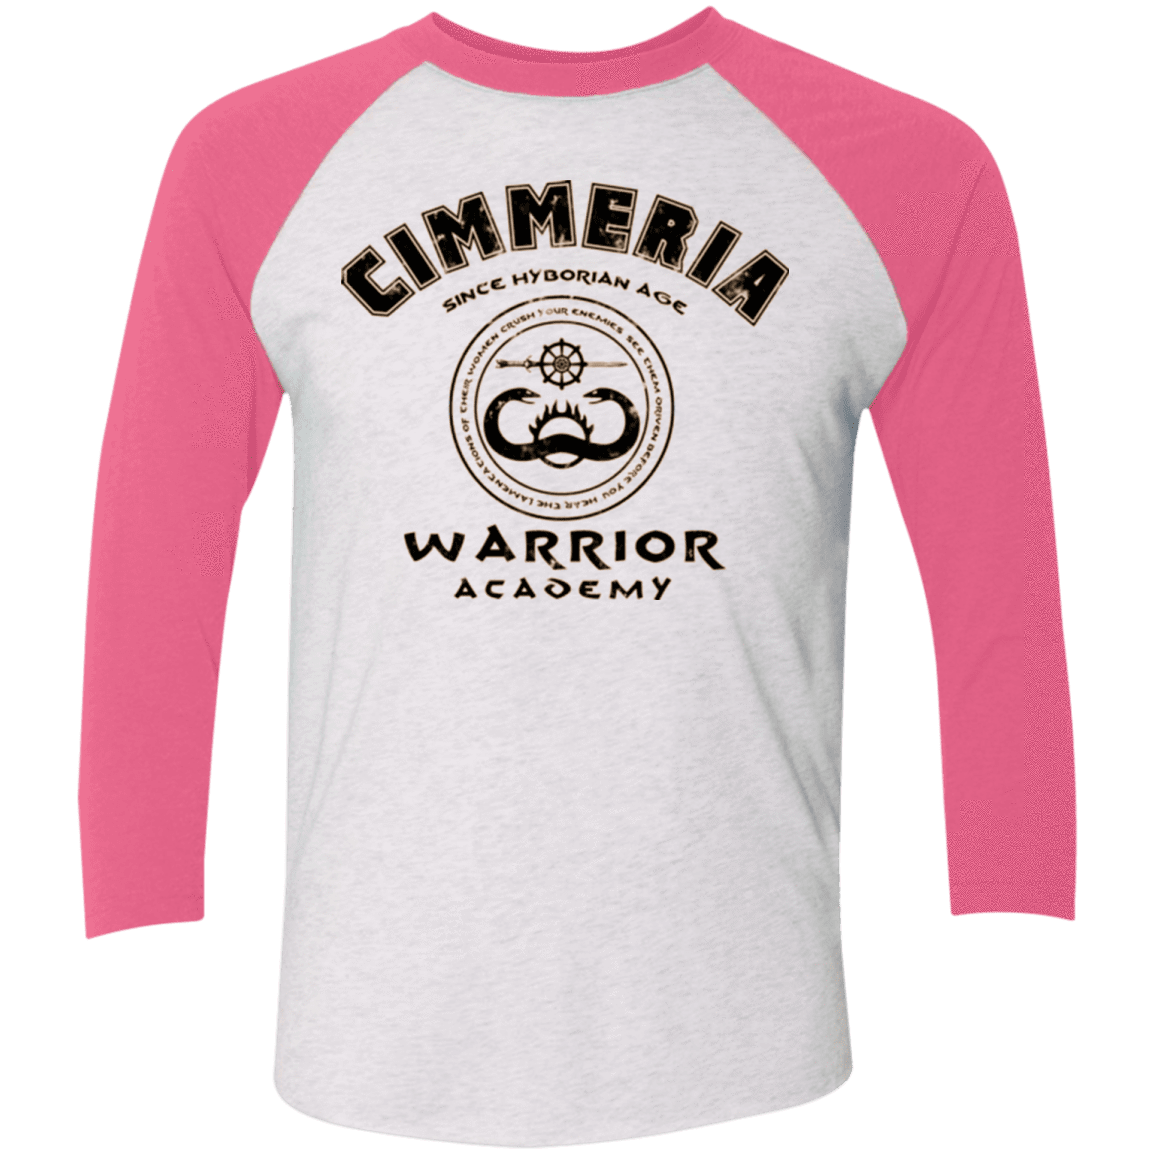 T-Shirts Heather White/Vintage Pink / X-Small Crimmeria Warrior academy Men's Triblend 3/4 Sleeve